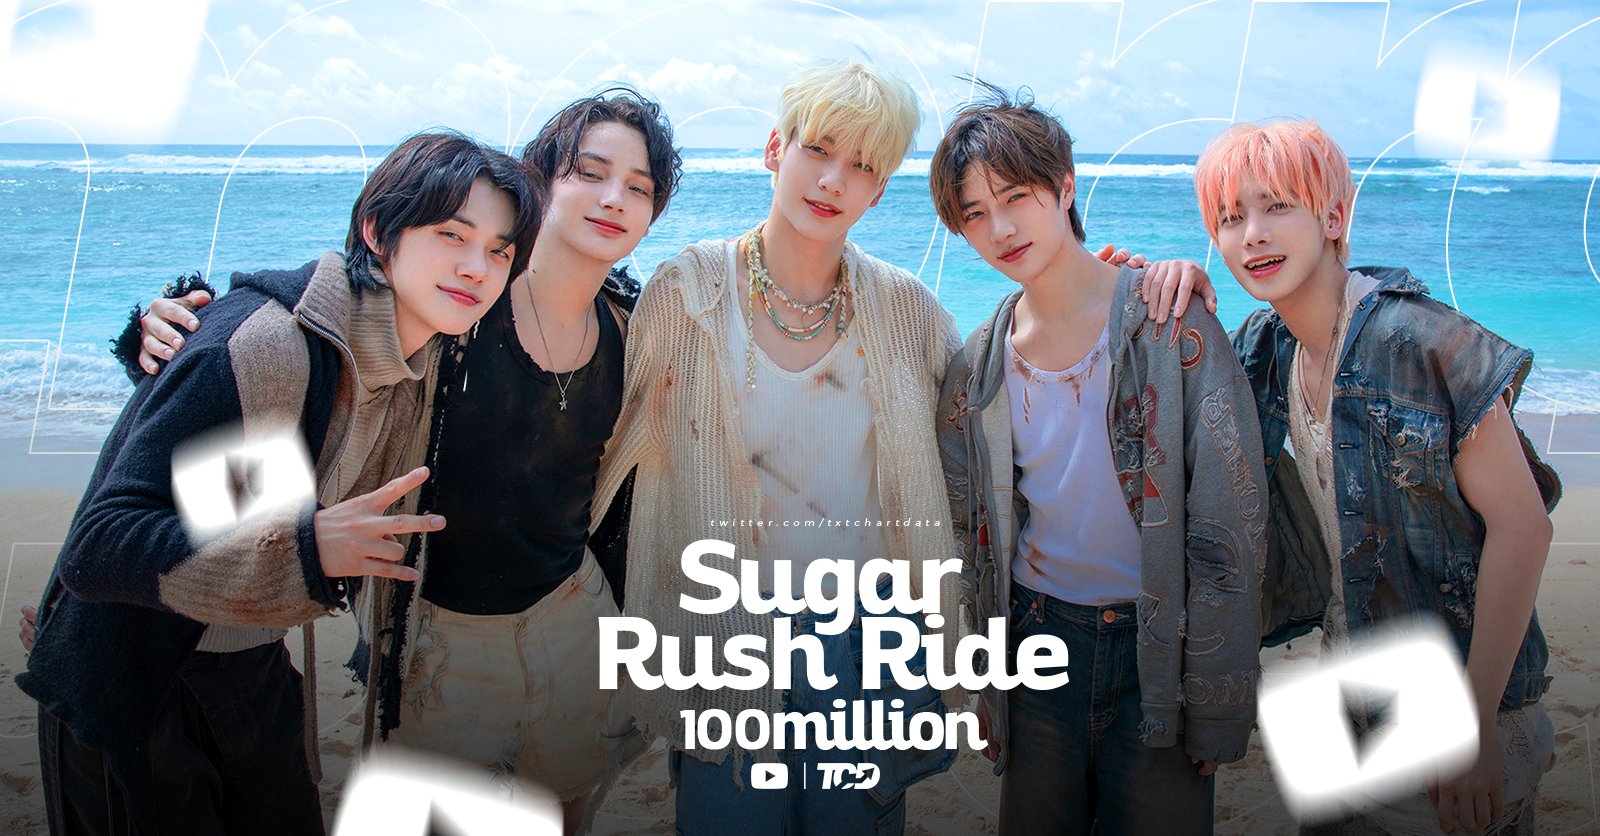 "Sugar Rush Ride" is the fastest MV of TXT to earn 100M views